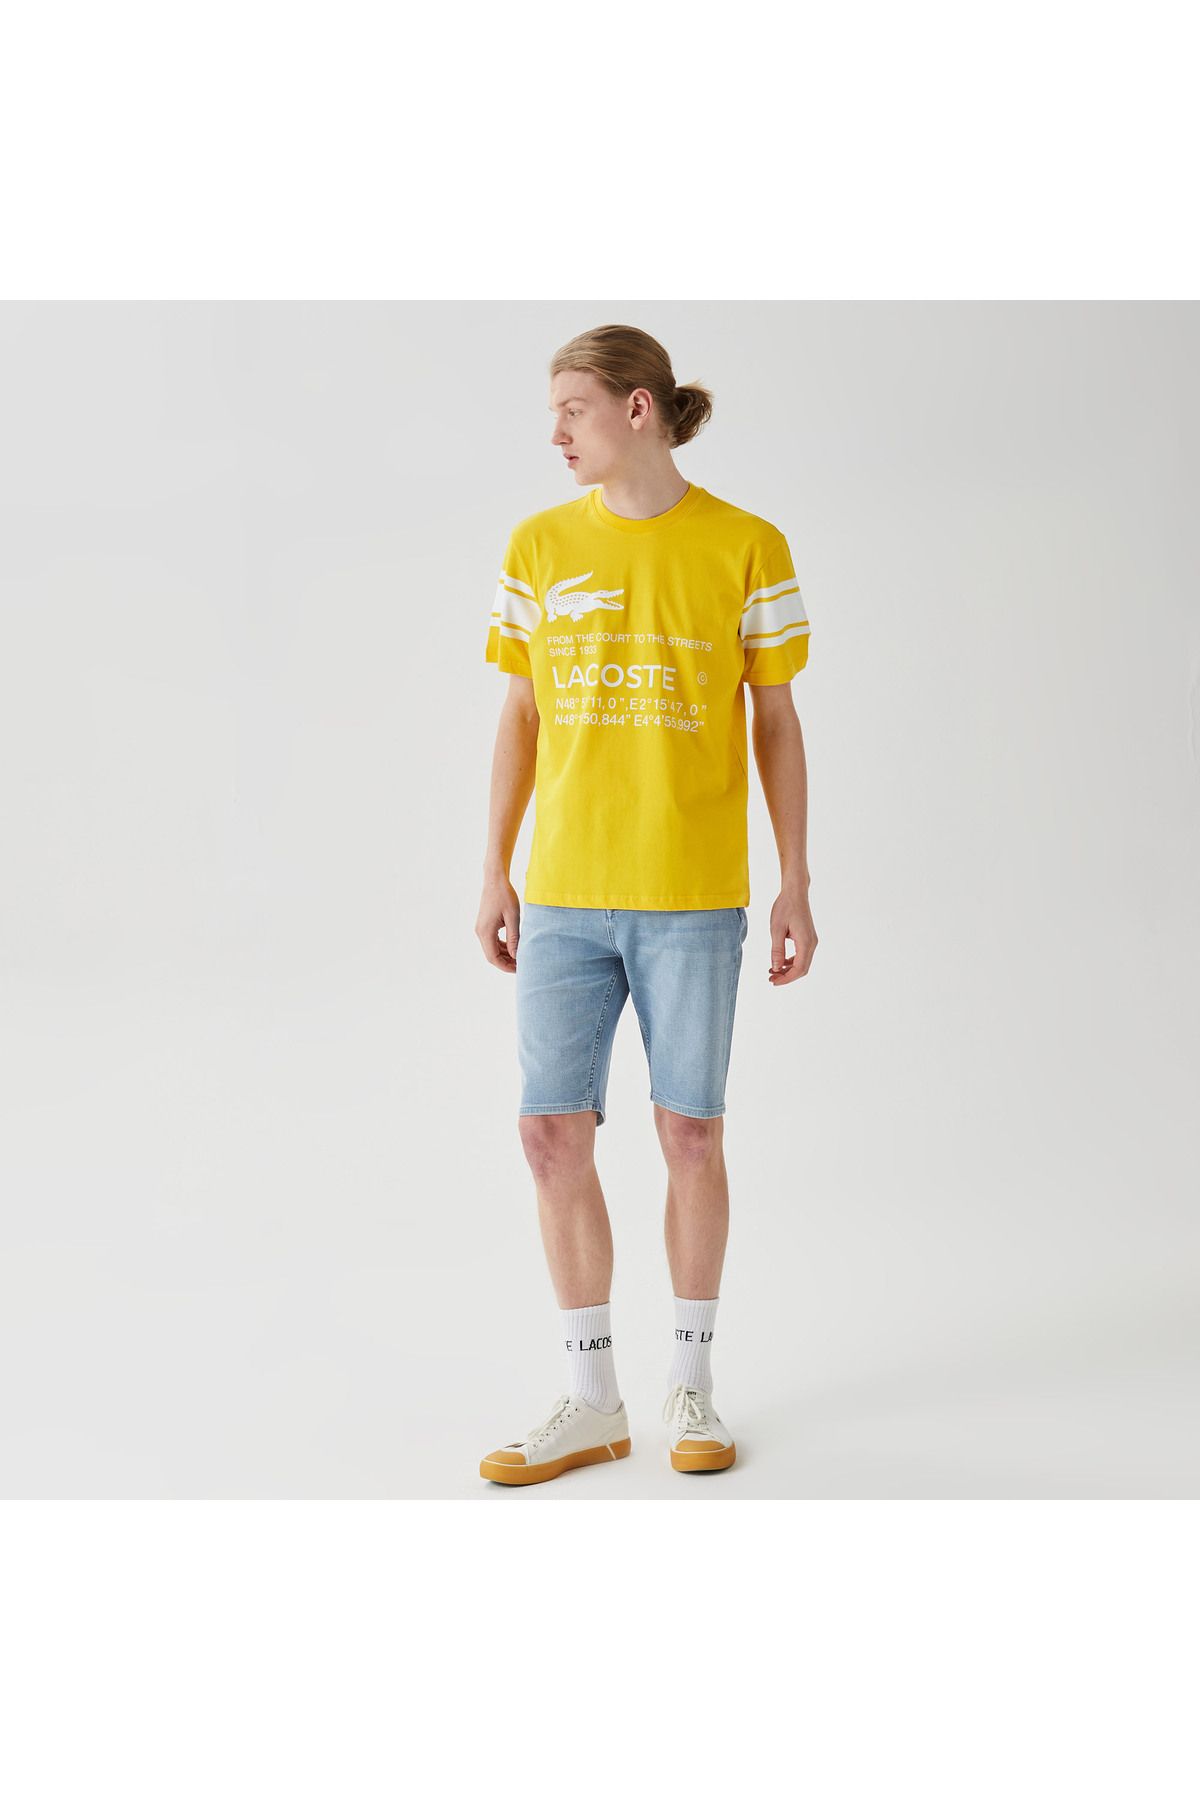 Lacoste دوچرخه زرد چاپی مناسب مردانه تی شرت